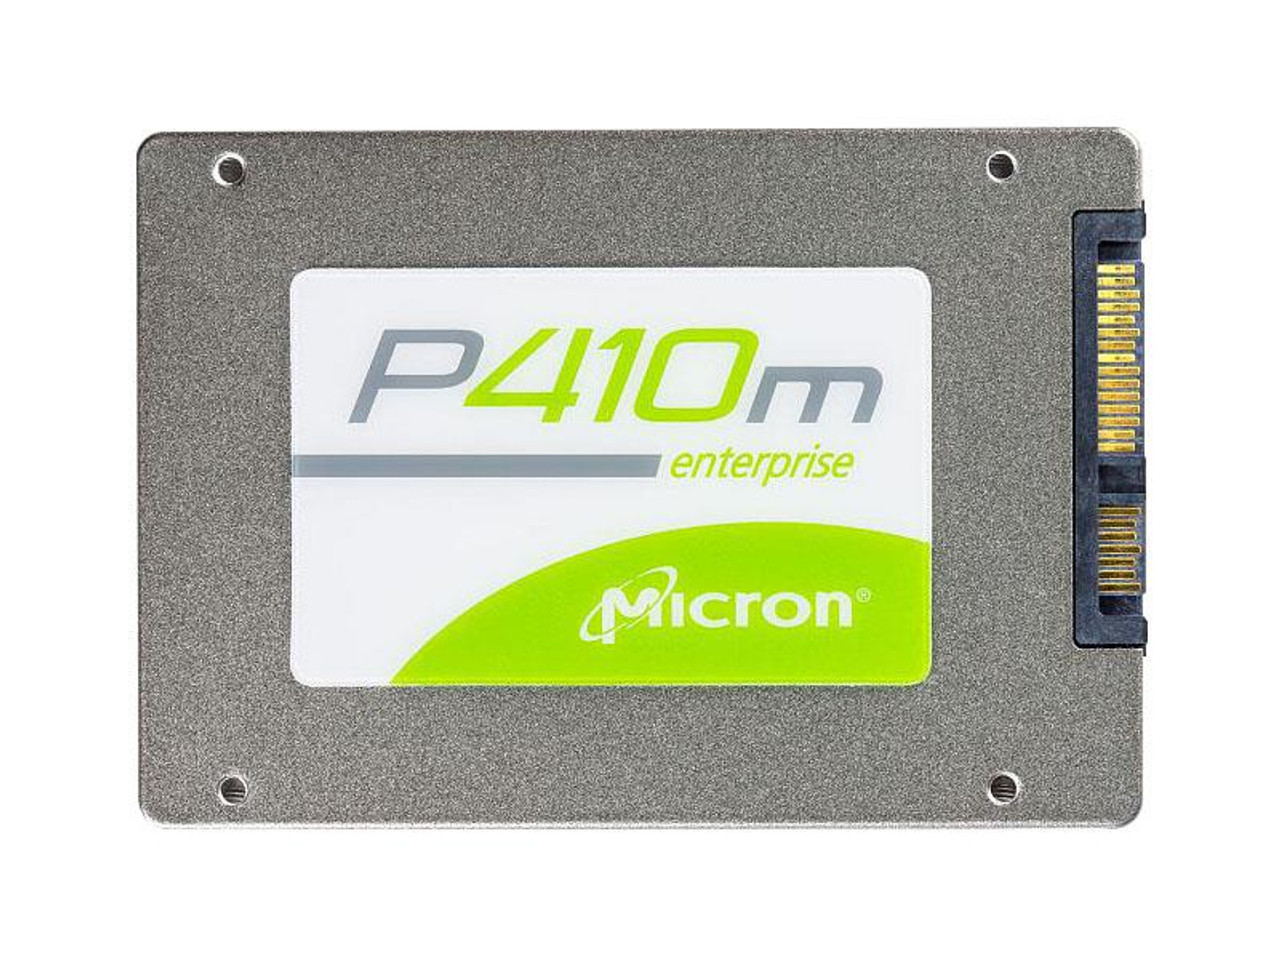 MTFDEAK400MAS Micron RealSSD P410m 400GB MLC SAS 6Gbps 2.5-inch Internal Solid State Drive (SSD)